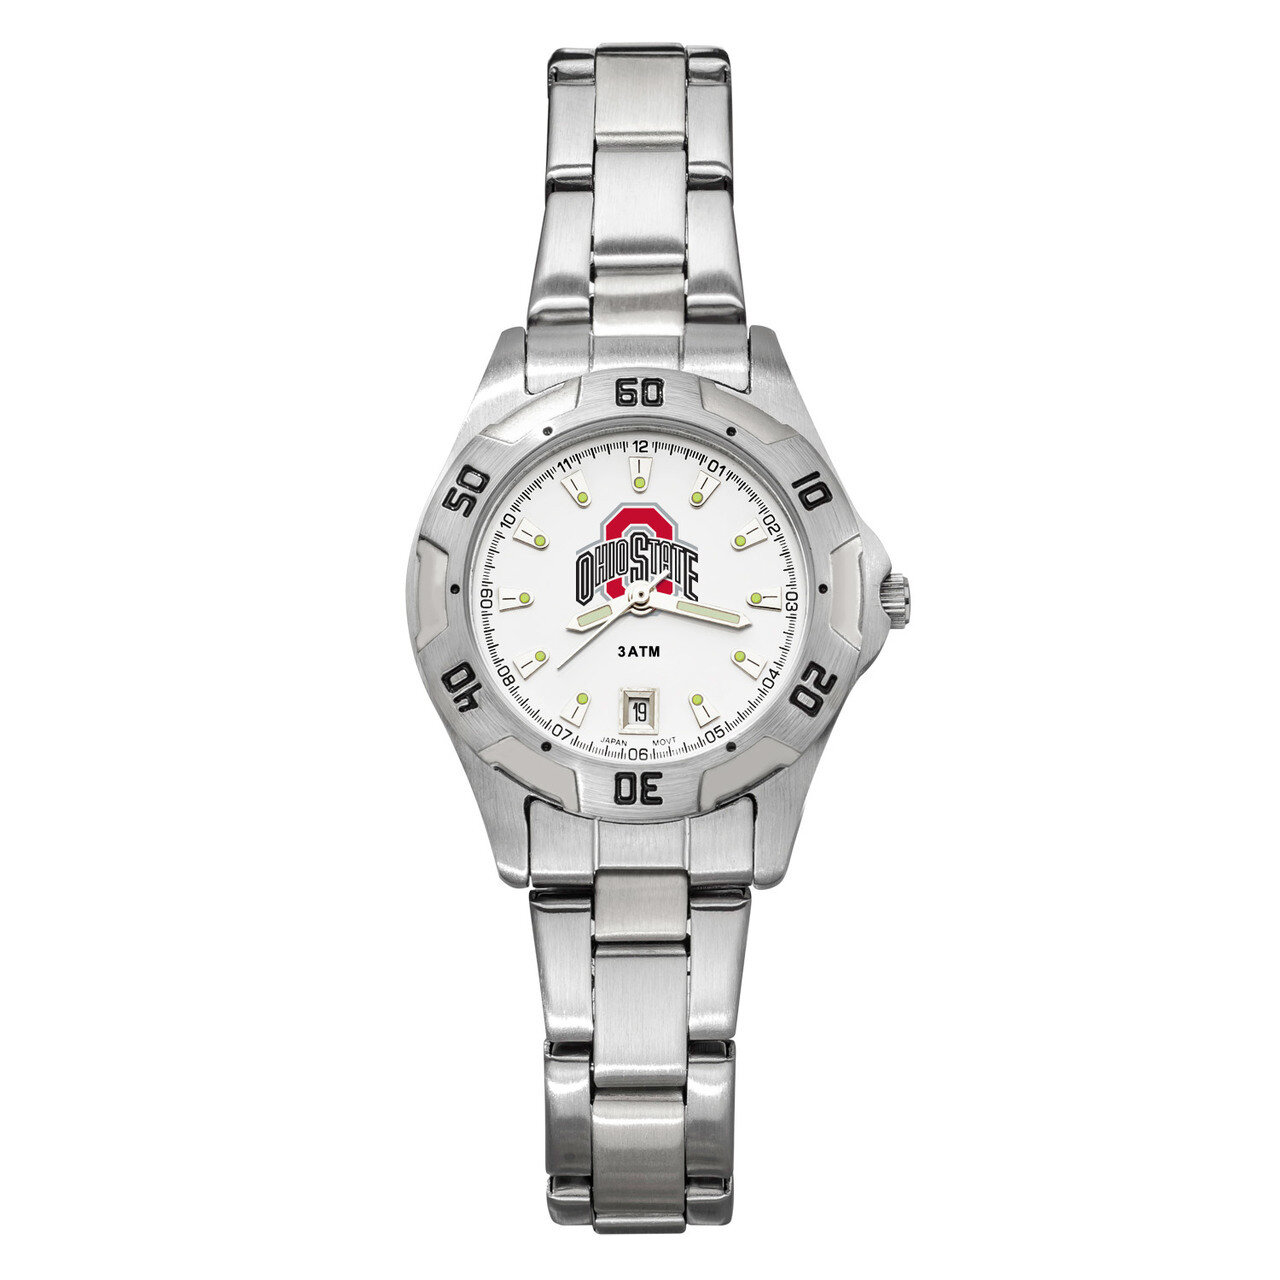 Ohio State University All-Pro Women's Chrome Watch with Bracelet OSU164